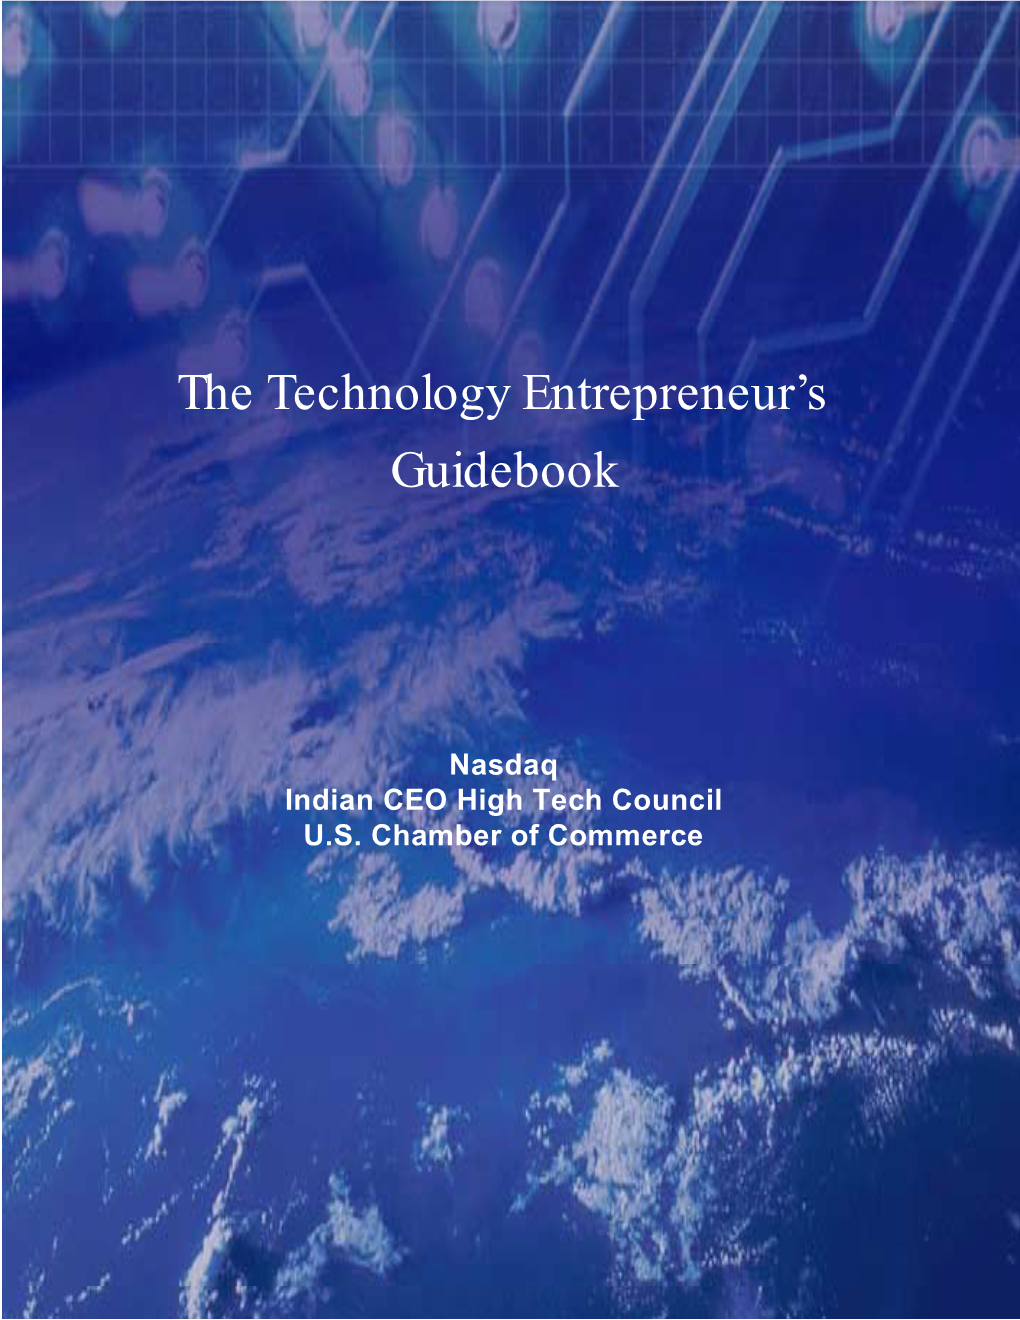 The Technology Entrepreneur's Guidebook